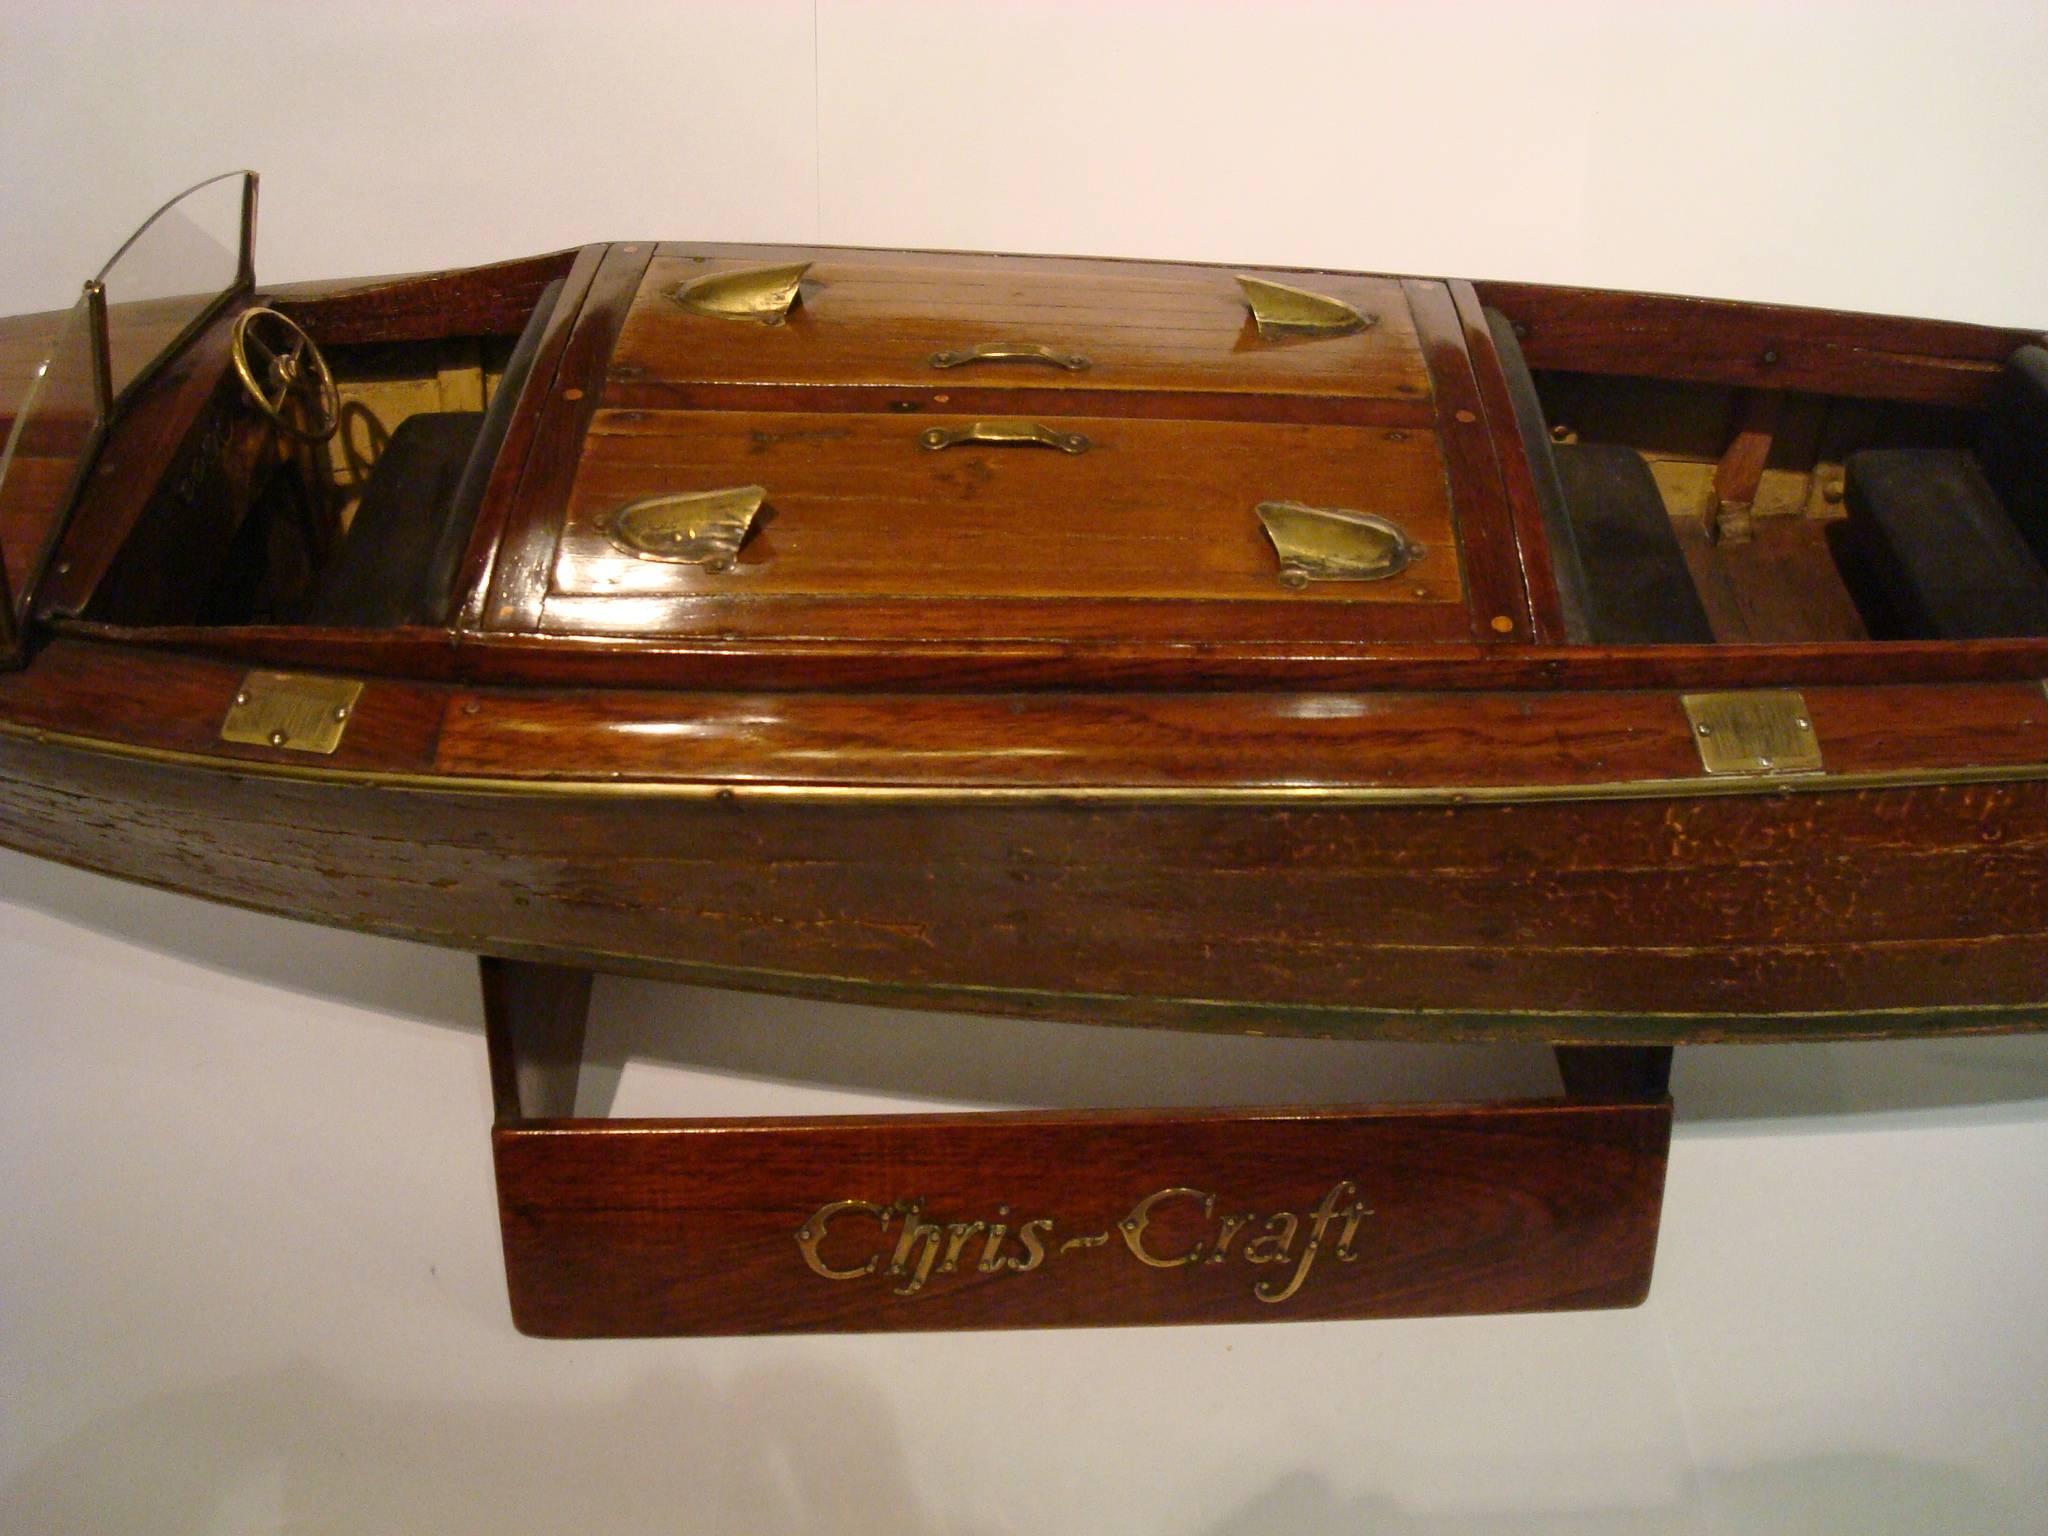 Argentine Chris Craft Speedboat Sales Model, circa 1930s Nautical